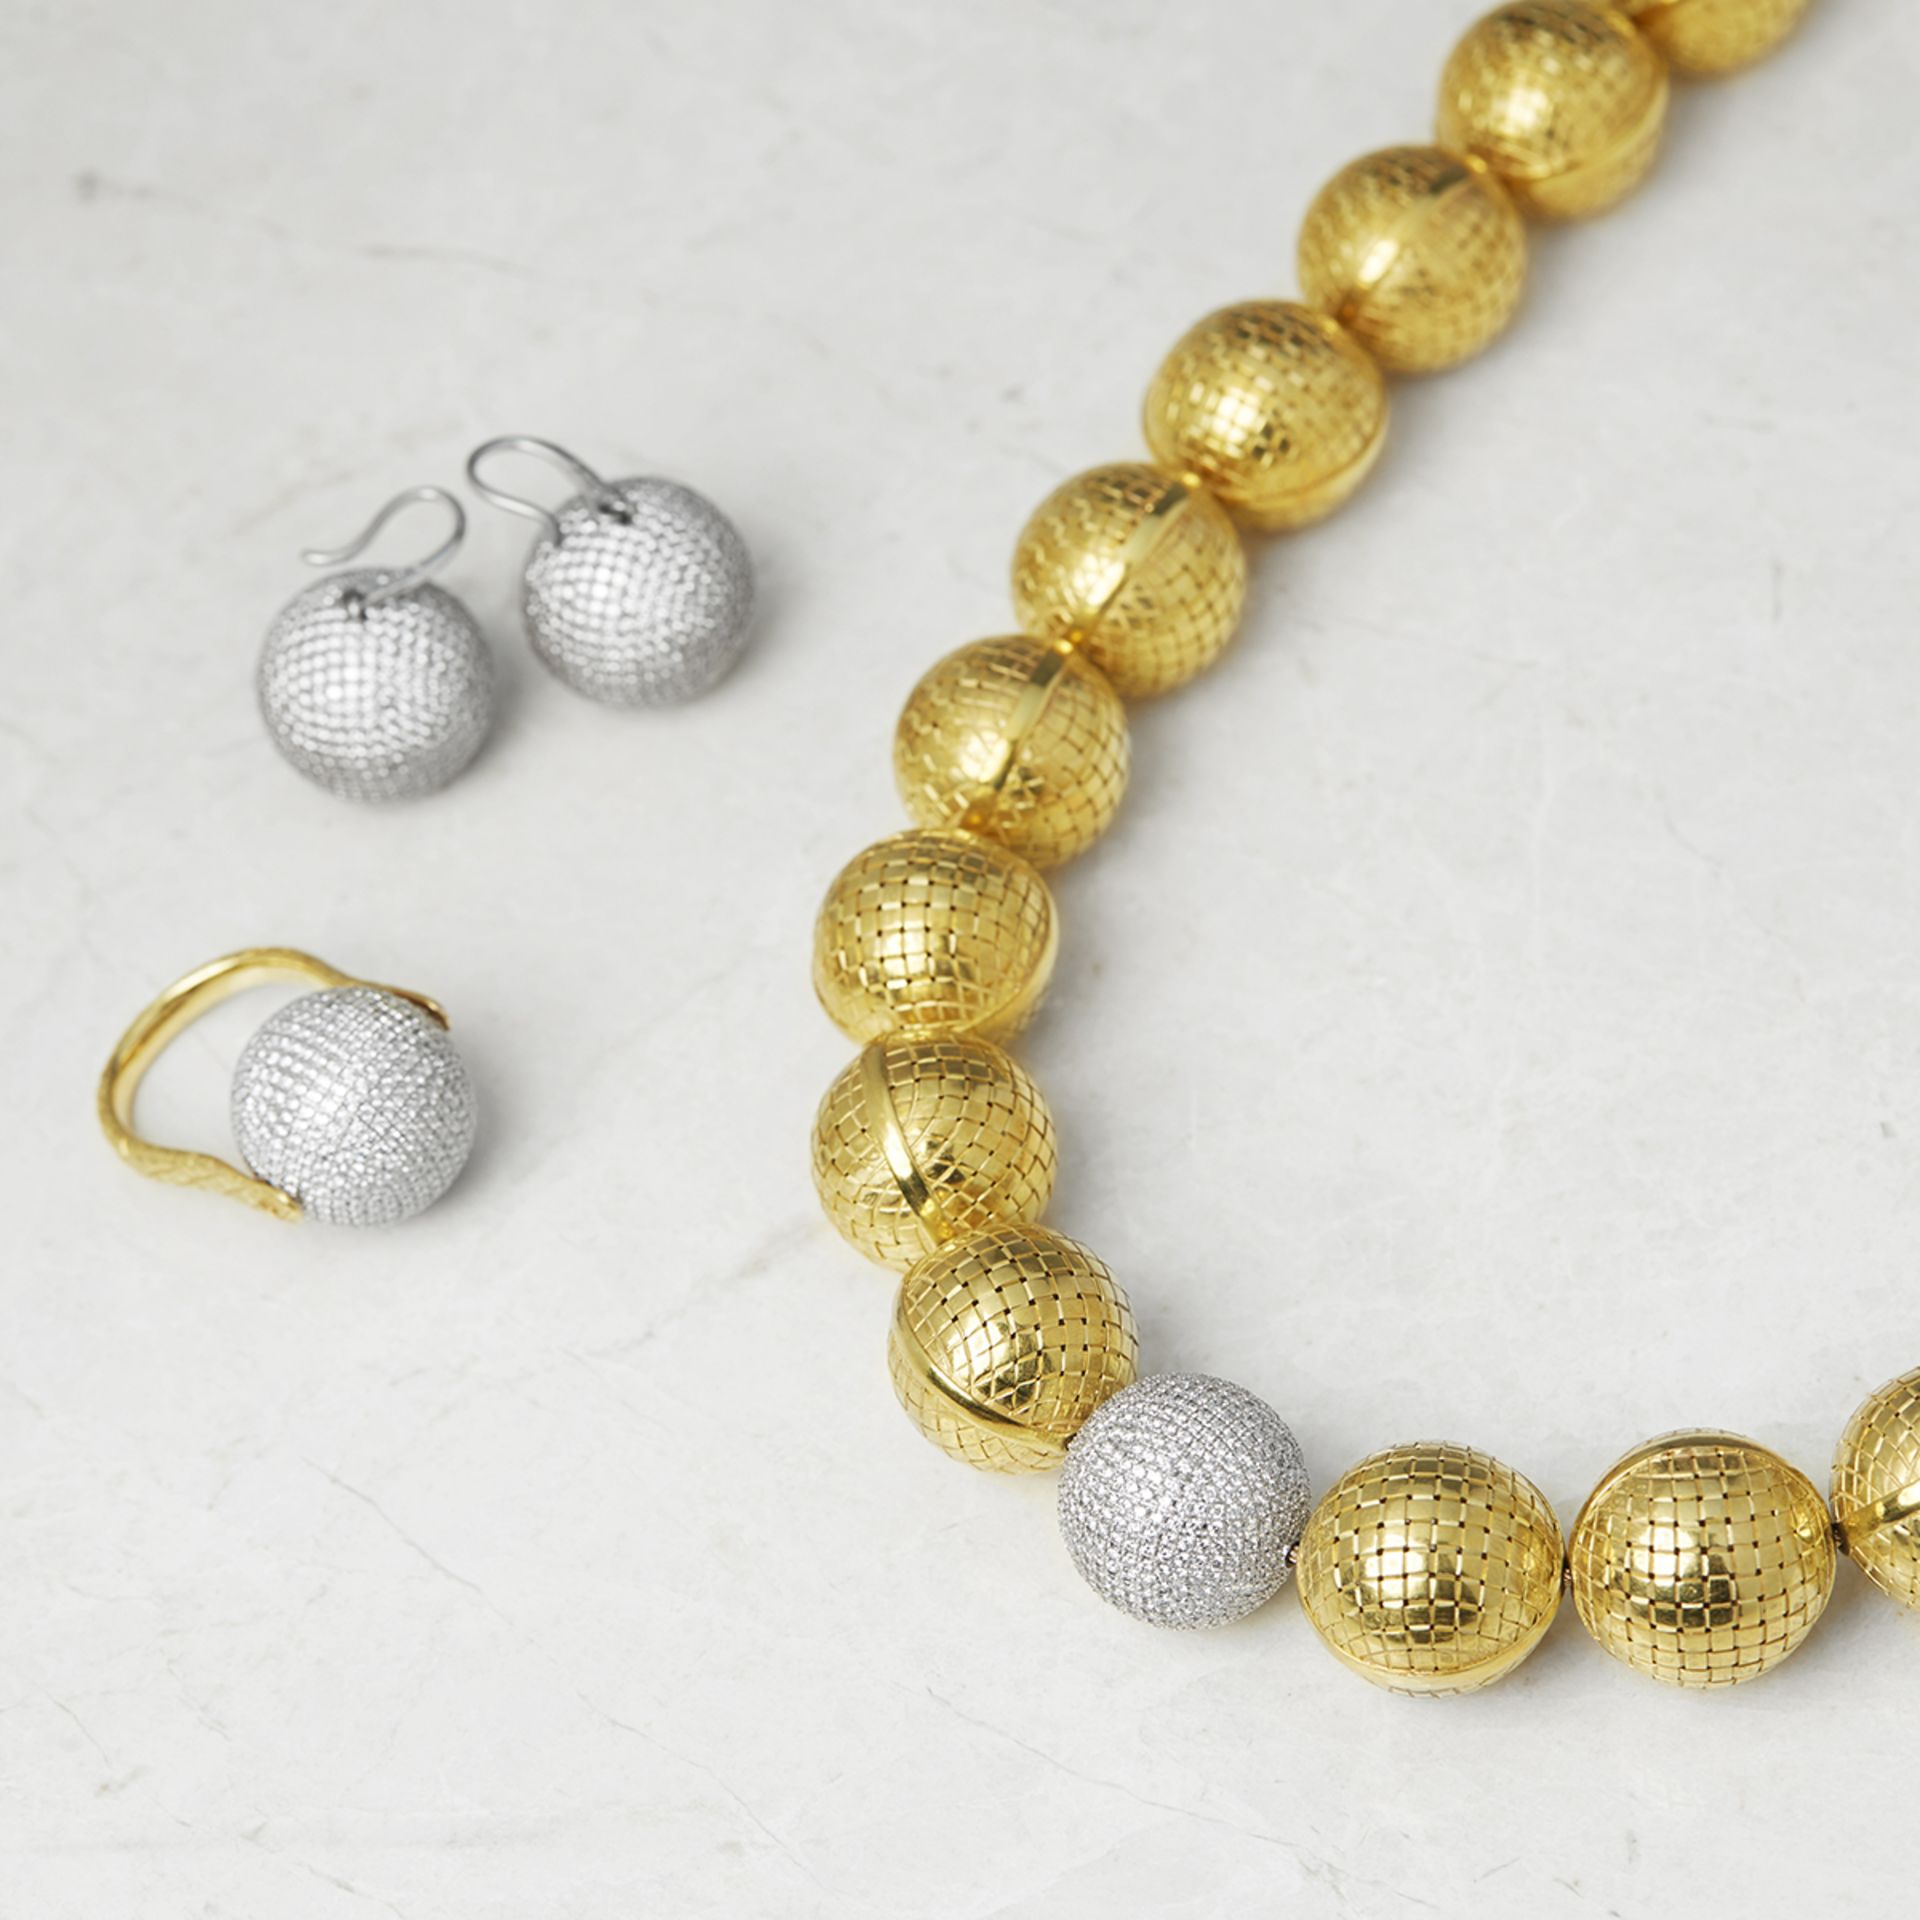 Bottega Veneta 18k Yellow & White Gold Diamond Necklace, Earrings & Ring Sfera Suite - Box & Certs - Image 21 of 21